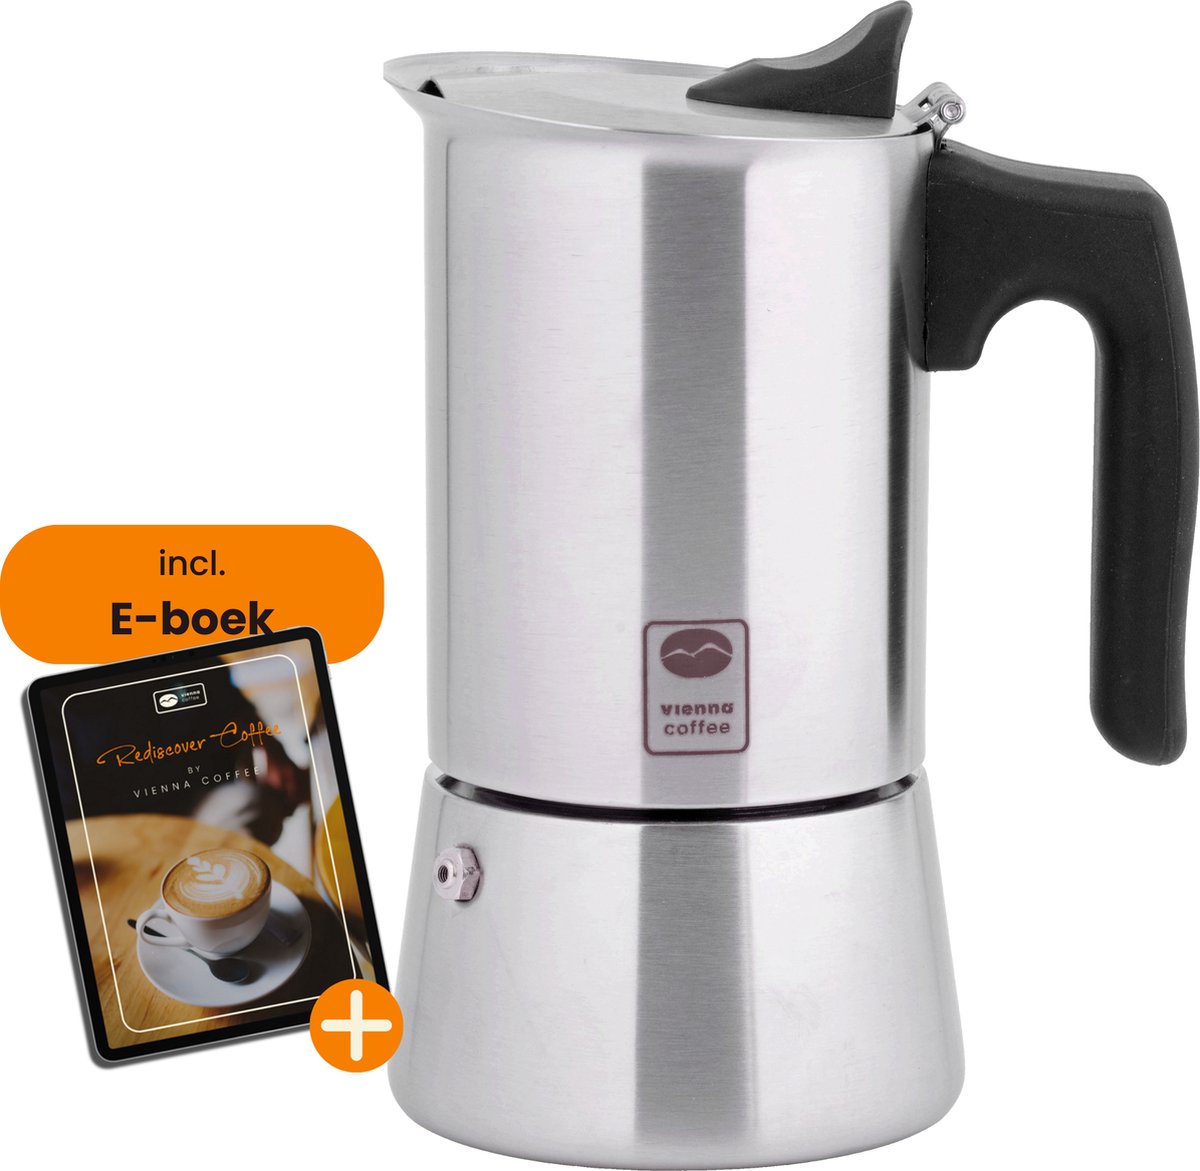 Vienna Coffee Percolator Inductie 6 Kops – Alle Warmtebronnen – RVS – Espresso maker – Moka Pot